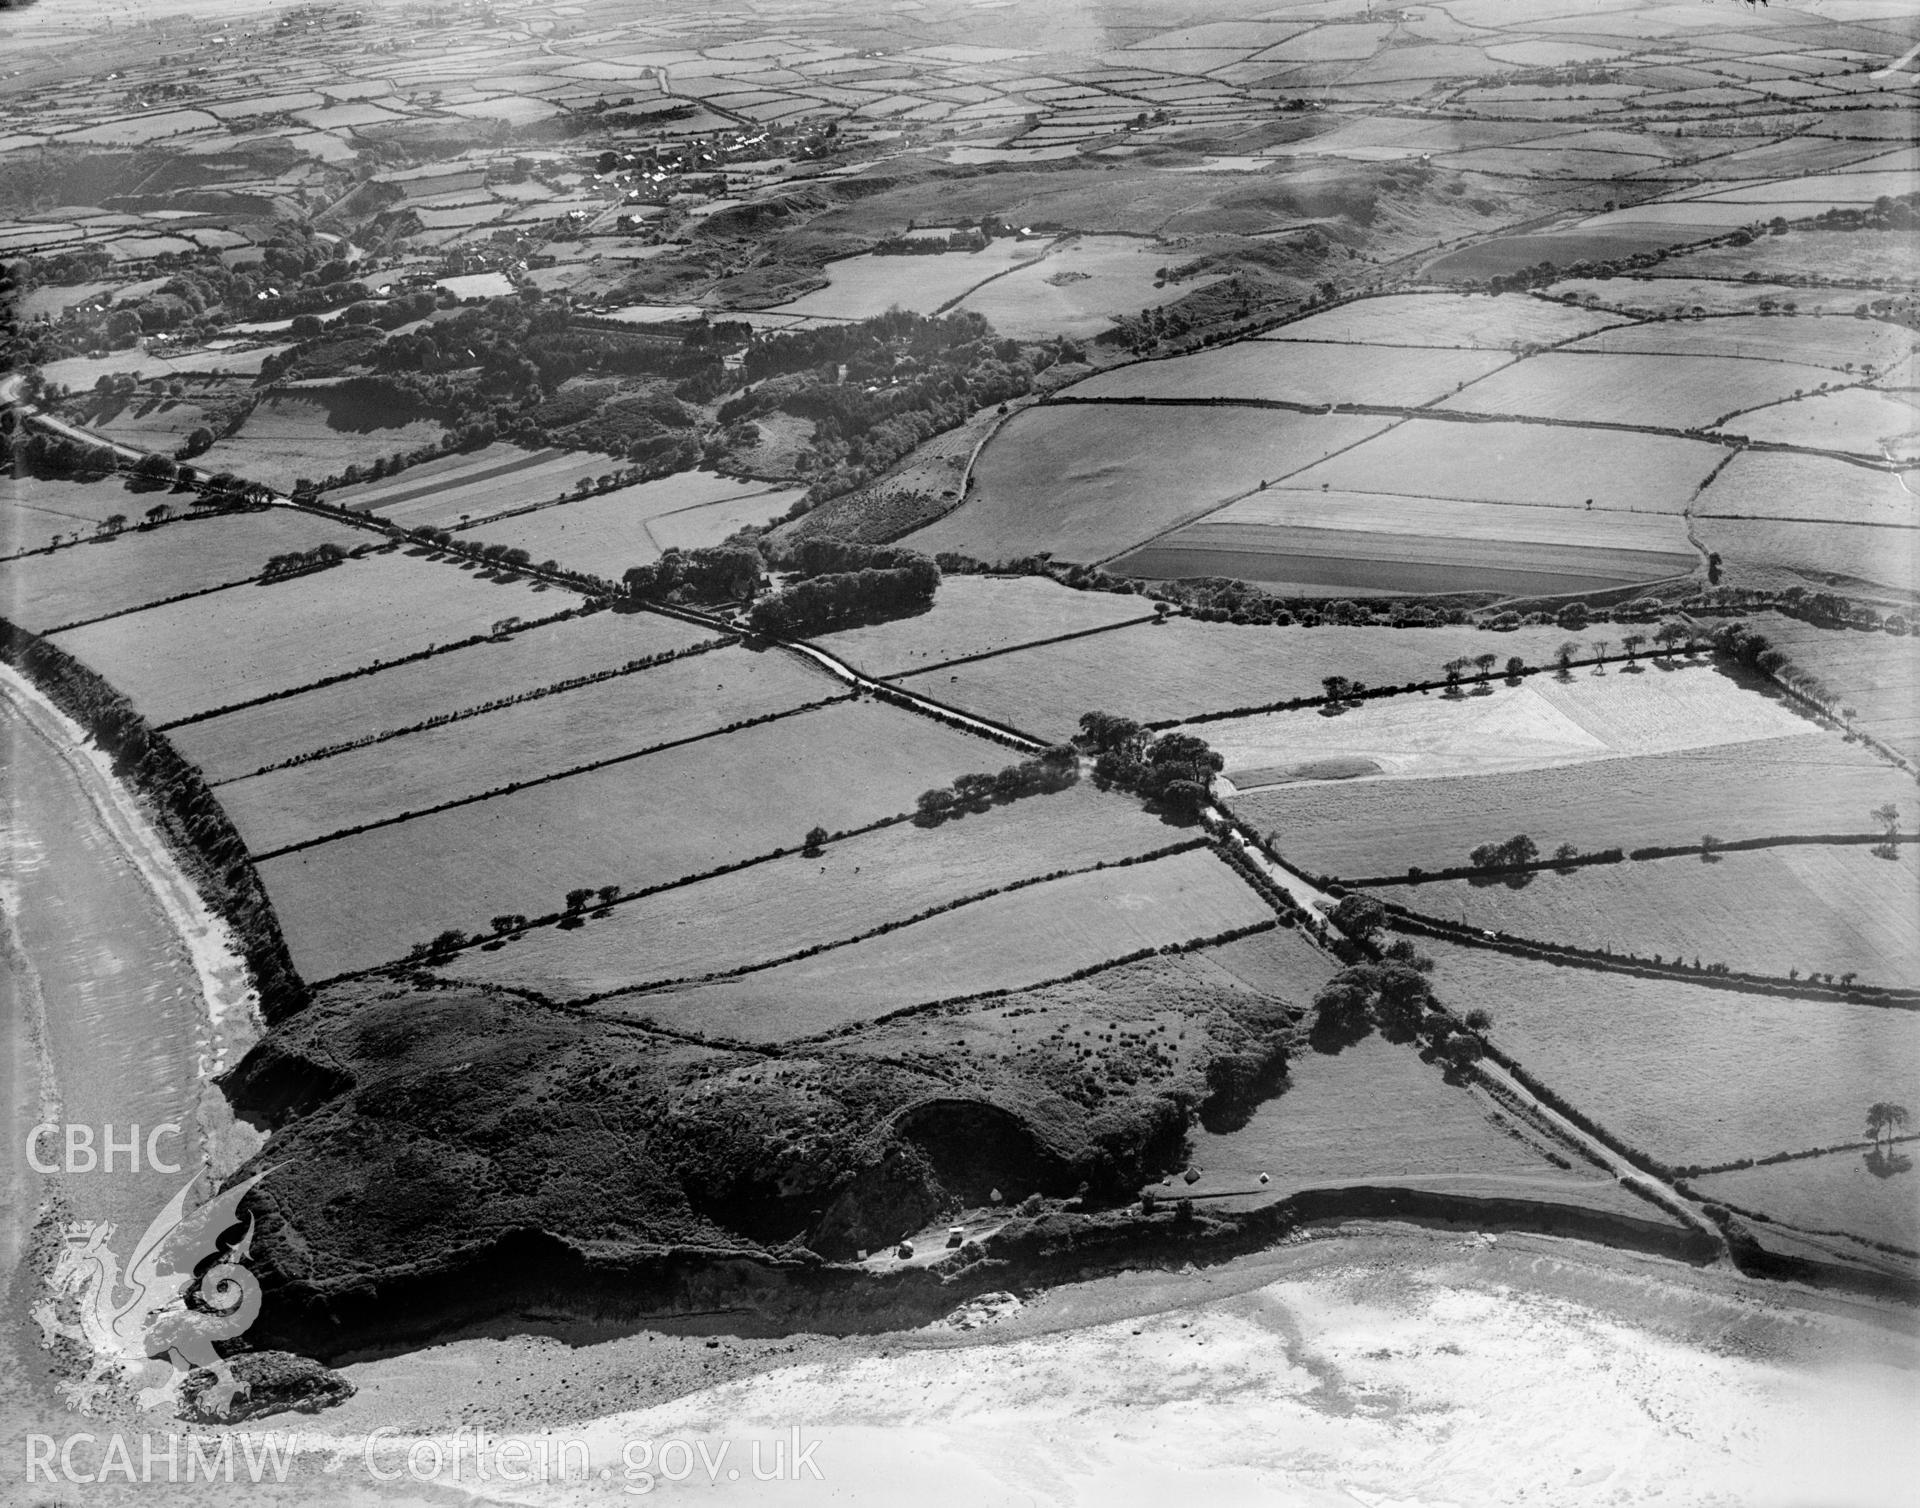 View of landscape (Penrhos and Carreg y Defaid) near Pwllheli, oblique aerial view. 5?x4? black and white glass plate negative.